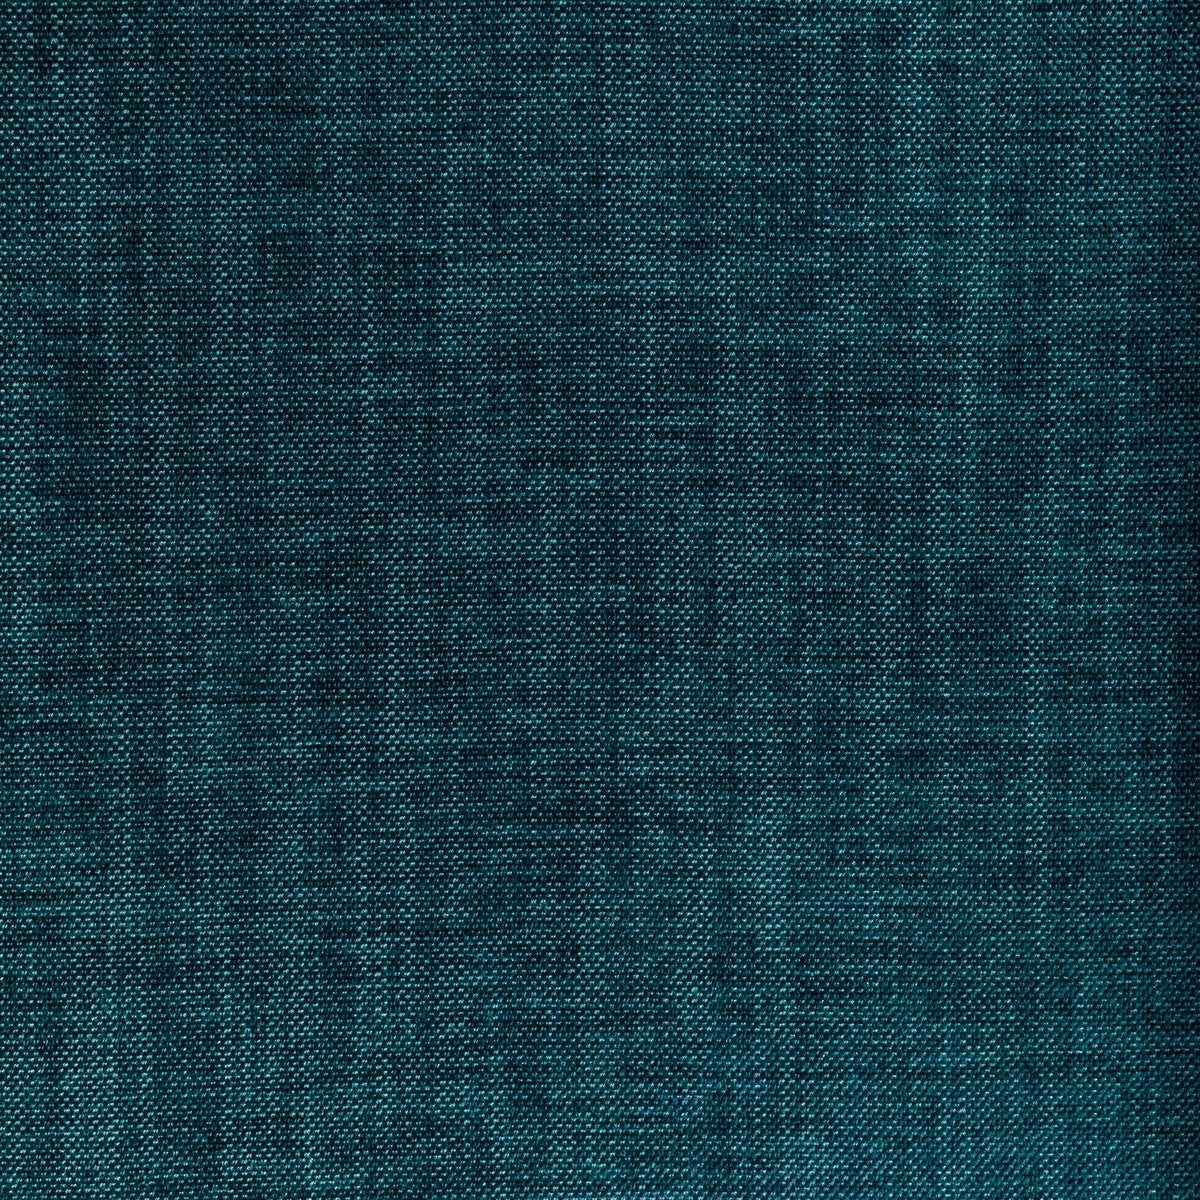 Kravet Smart fabric in 36650-505 color - pattern 36650.505.0 - by Kravet Smart in the Performance Kravetarmor collection